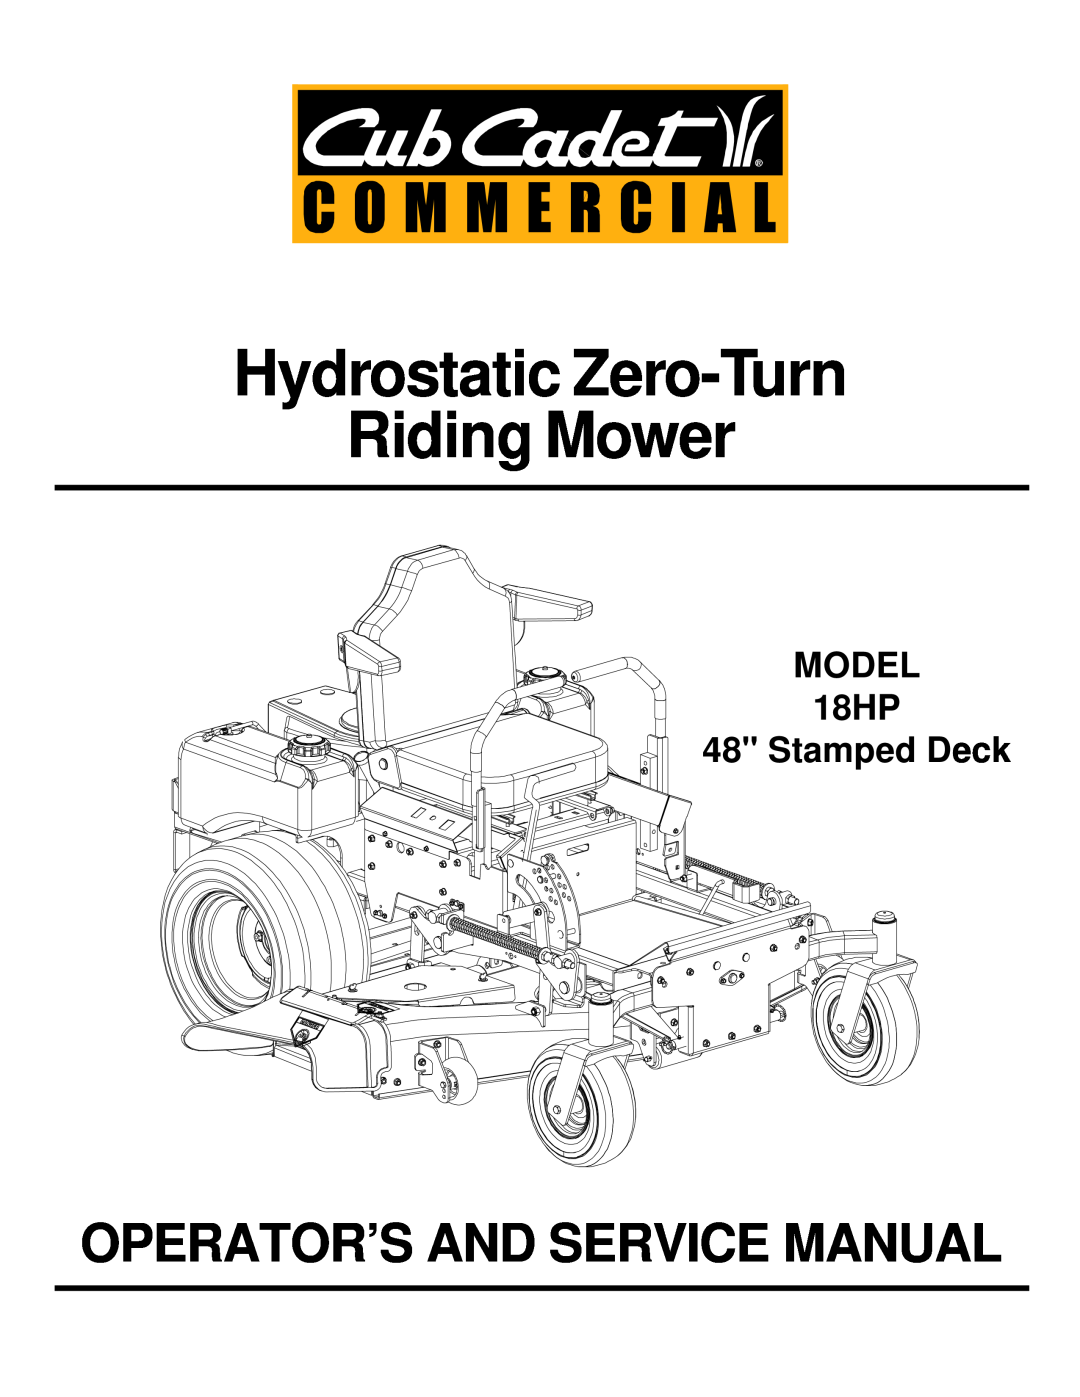 Cub Cadet service manual Hydrostatic Zero-Turn Riding Mower, MODEL 18HP 48 Stamped Deck 